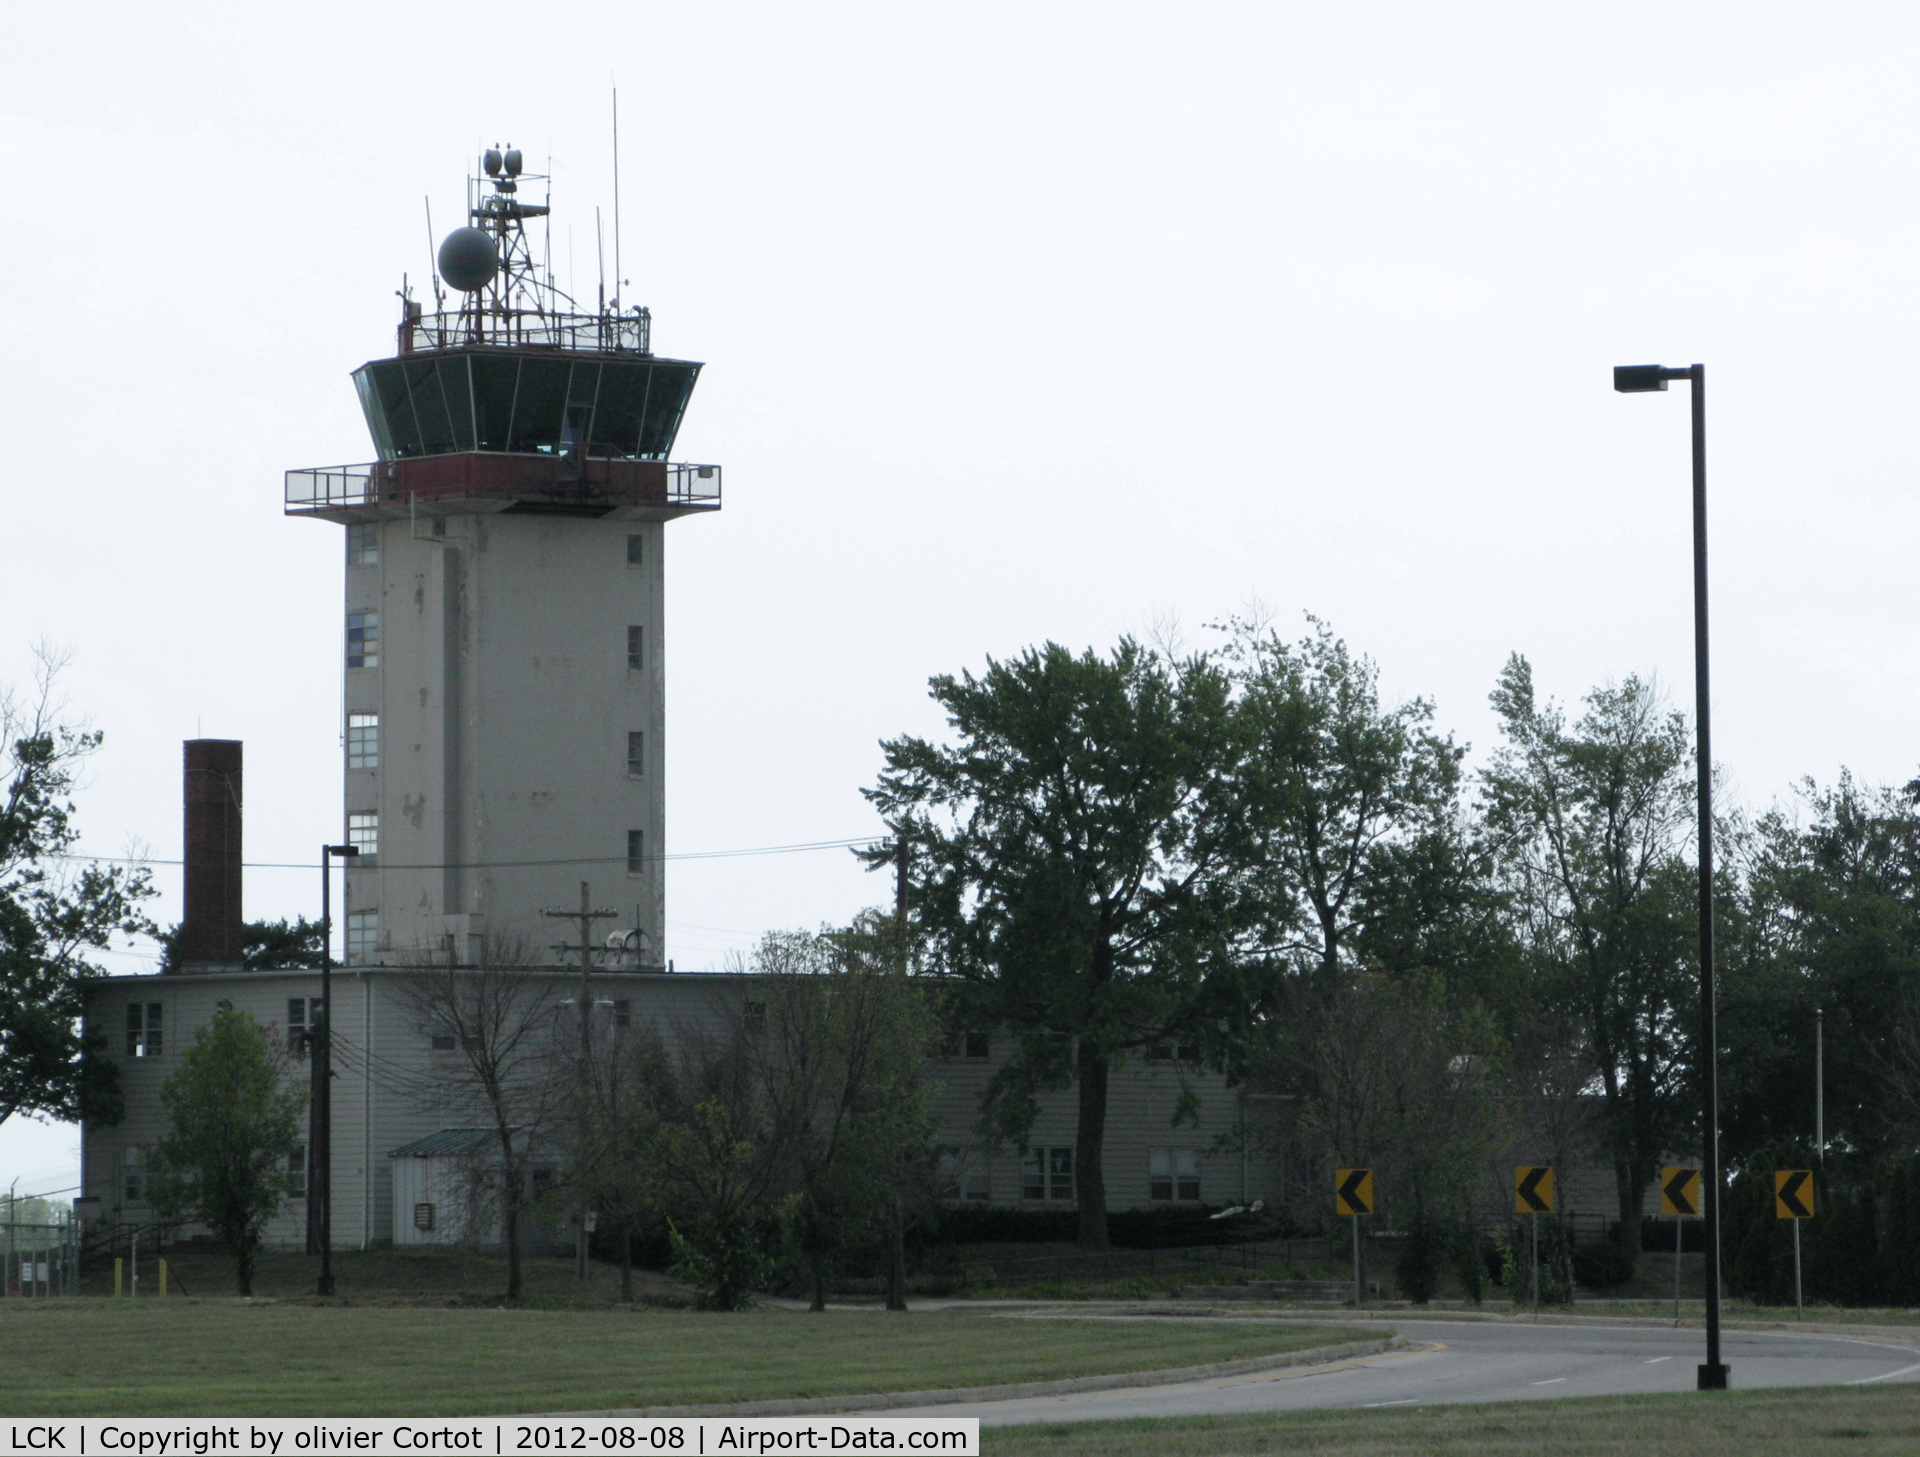 Rickenbacker International Airport (LCK) - the control tower